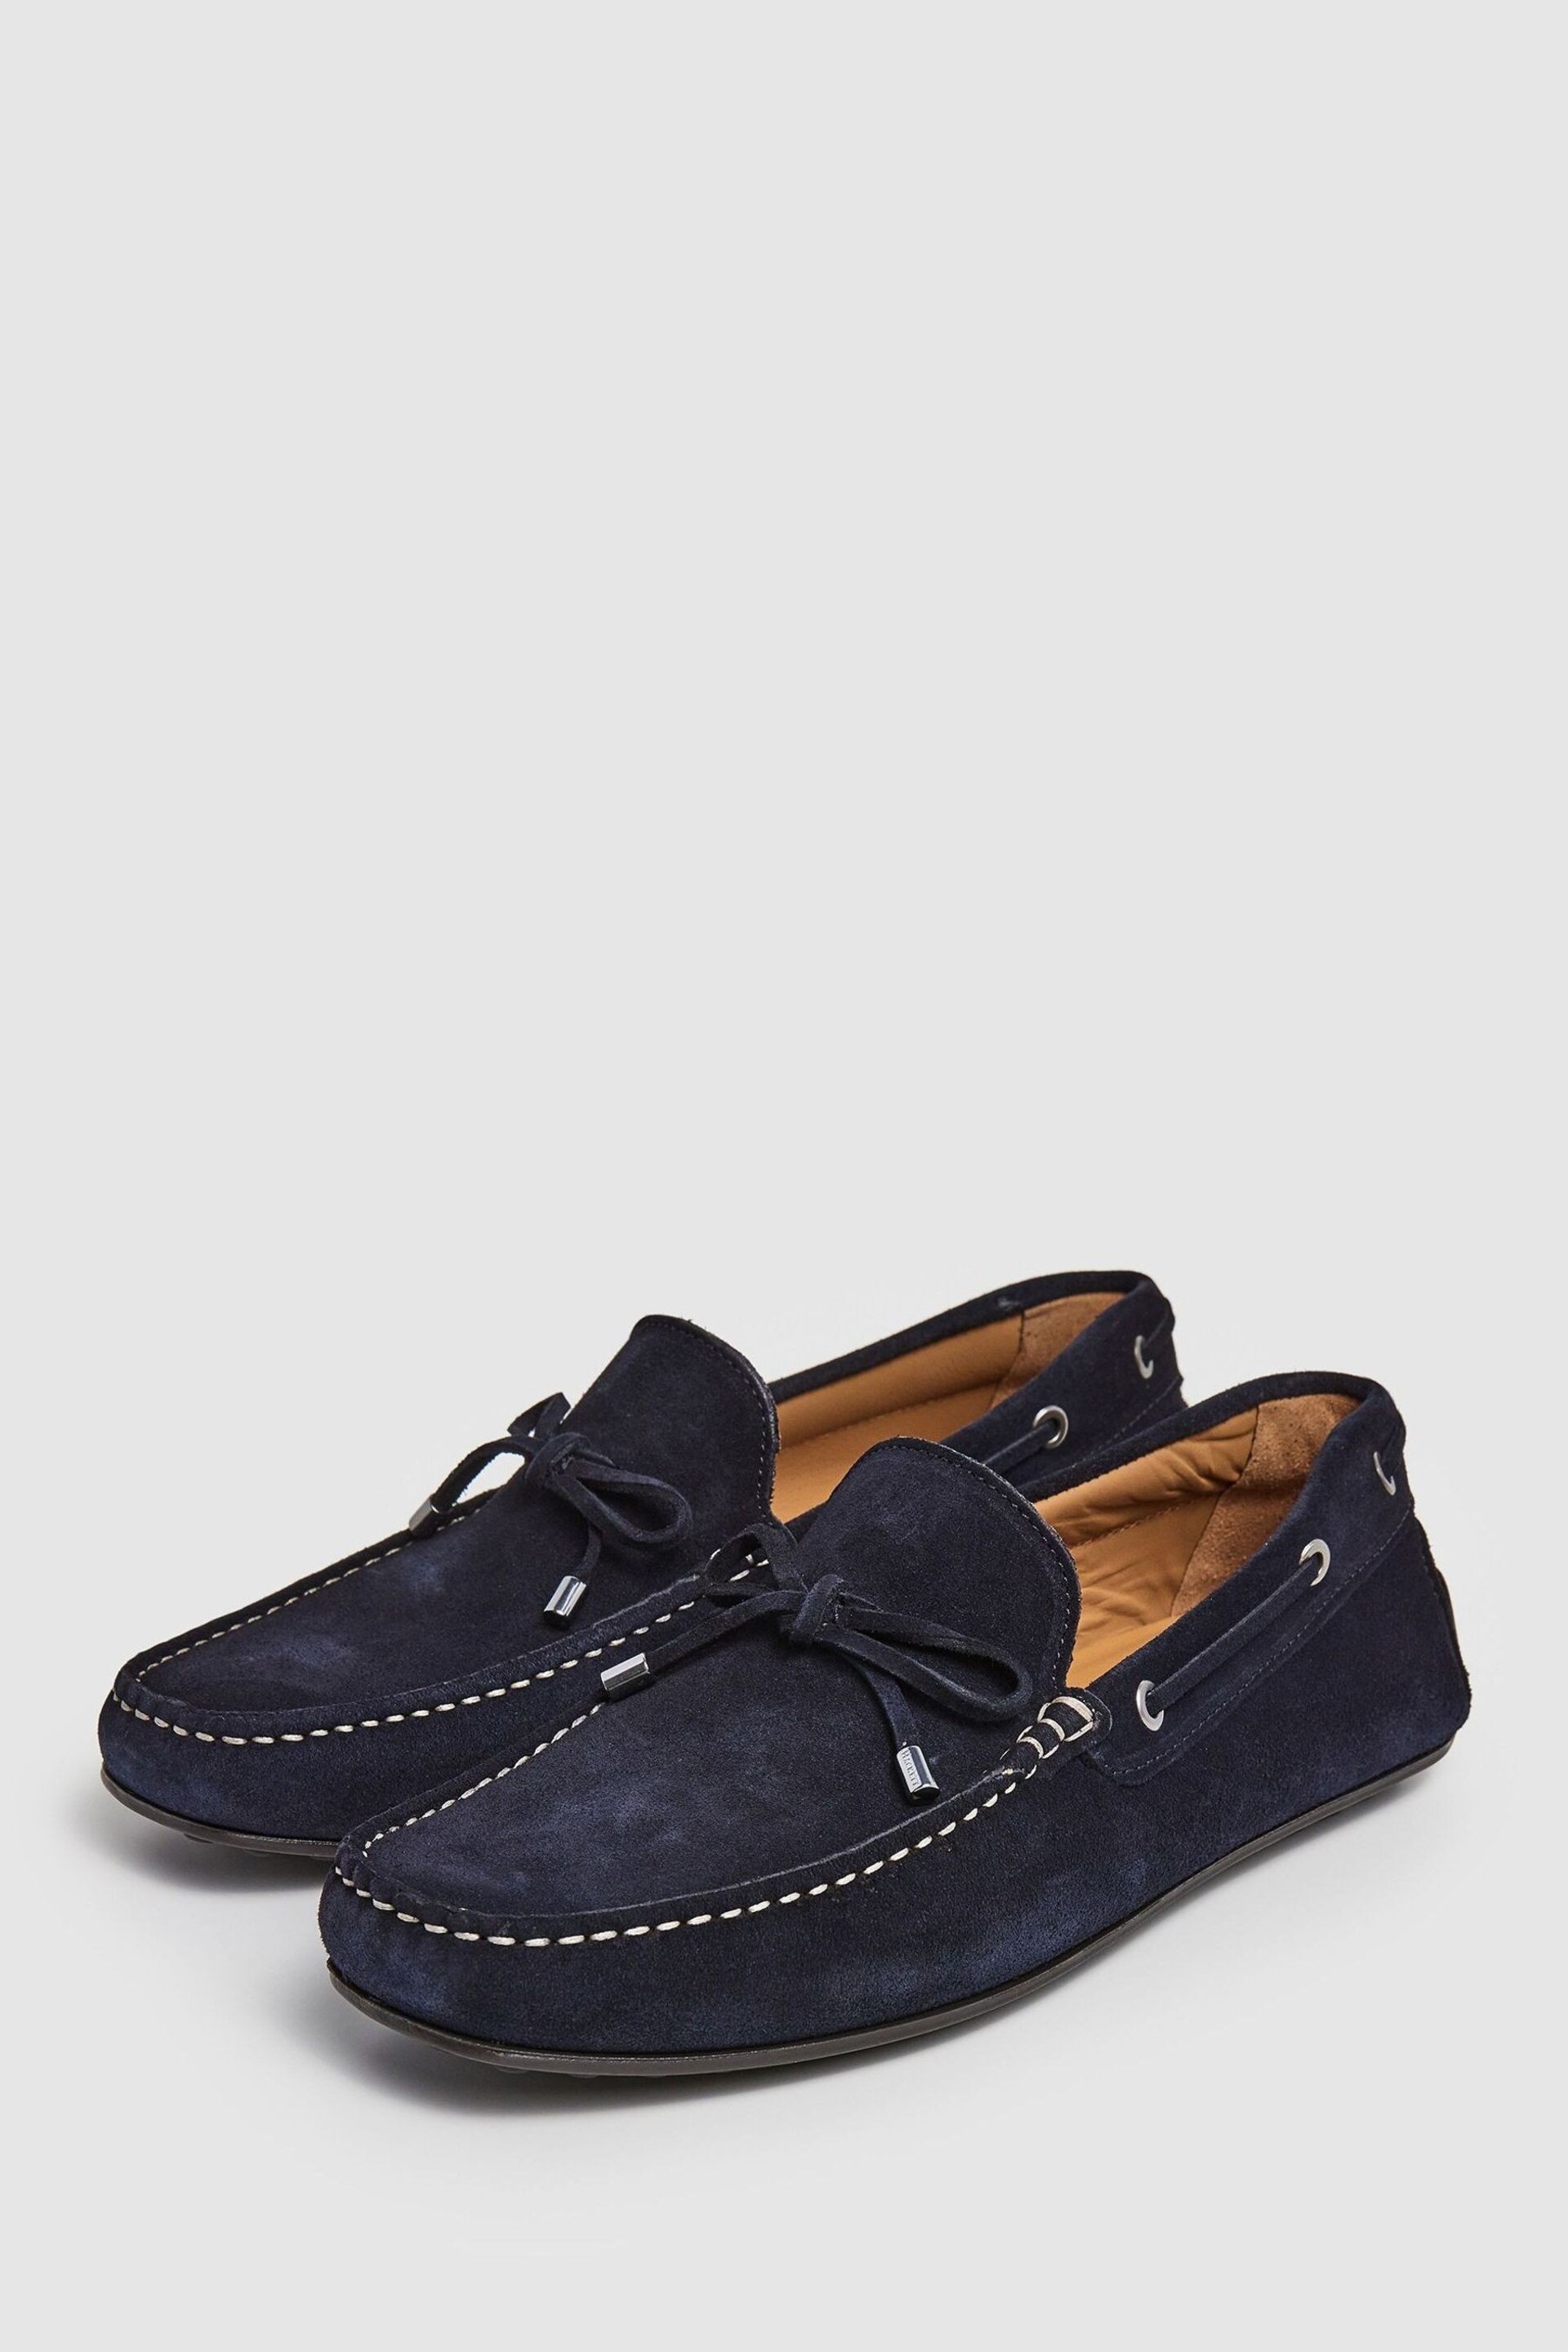 Hackett London Men Blue Regular Shoes - Image 2 of 6